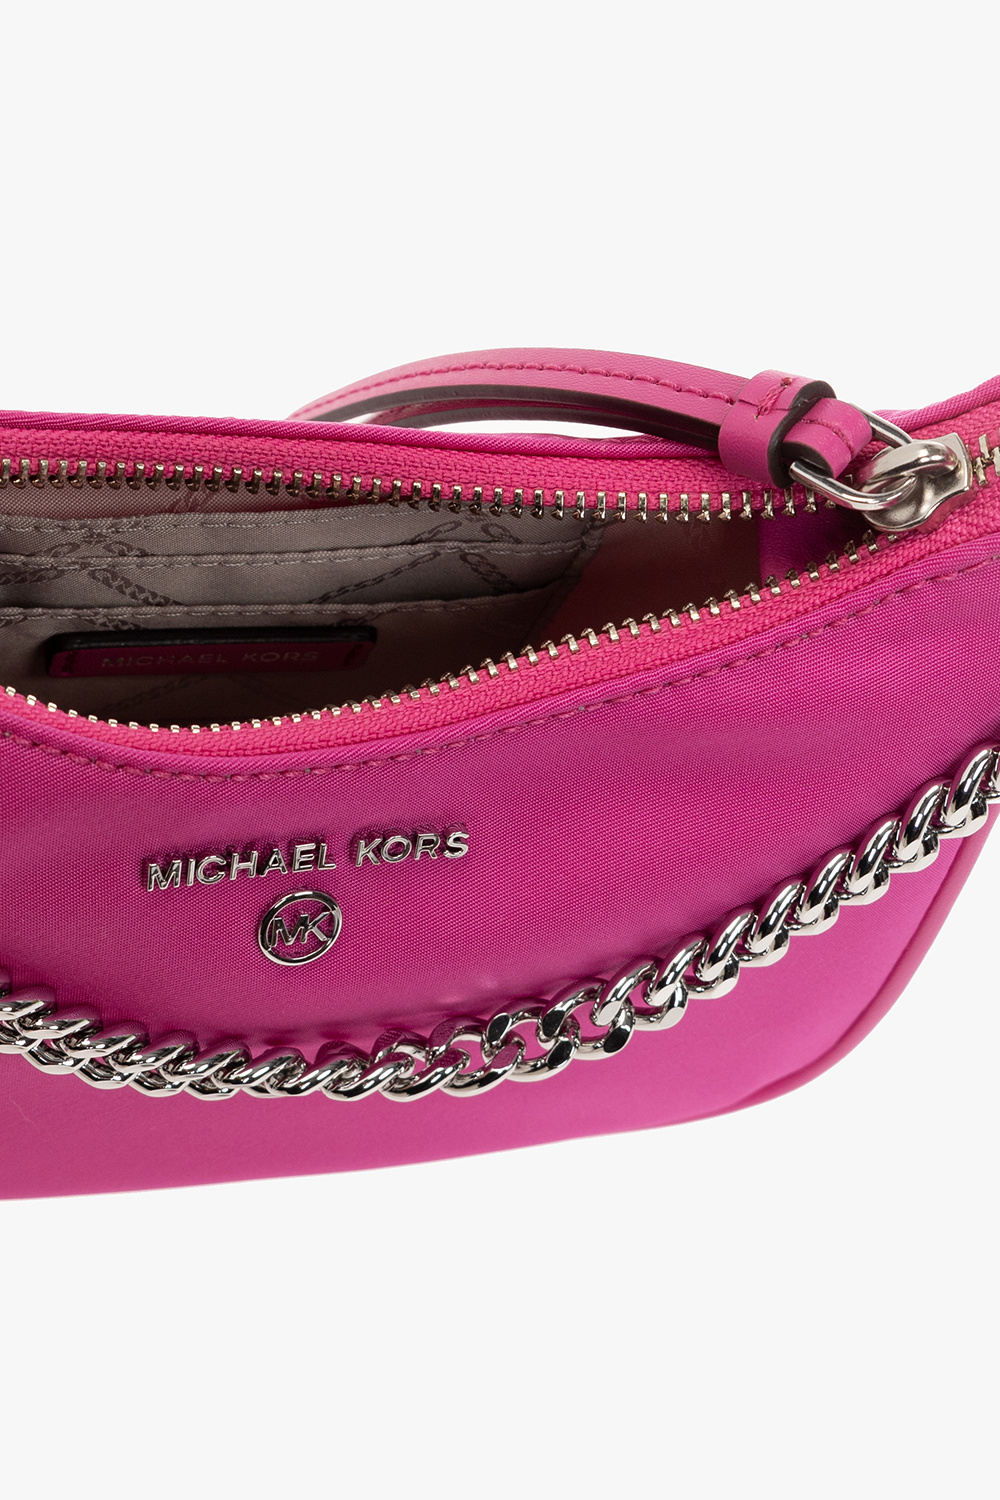 StclaircomoShops, Women's spade Bags, Michael Michael Kors 'Jet Set Charm  Small' handbag